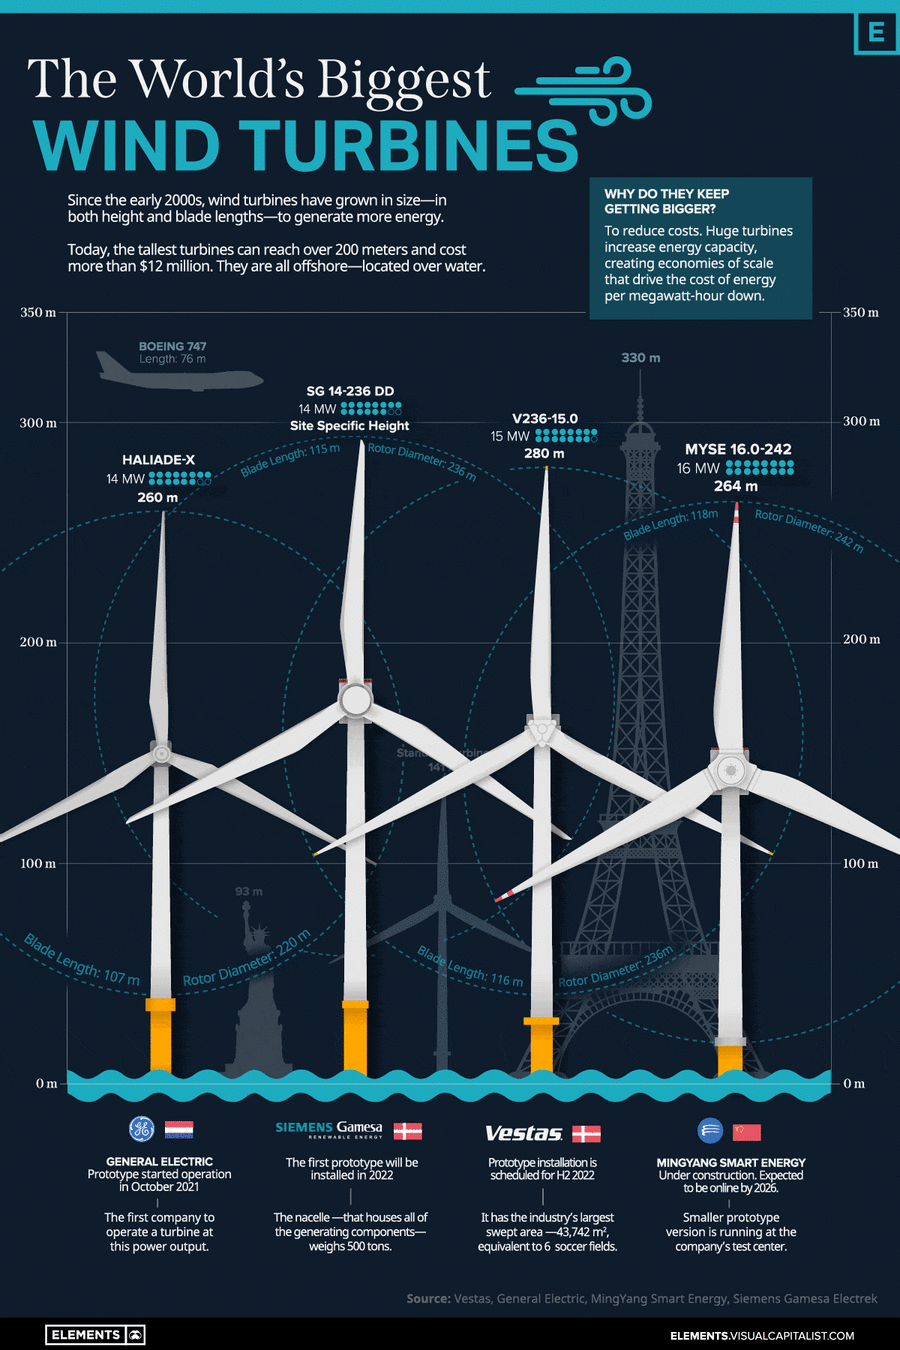 The World’s Biggest Wind Turbines (Animated)